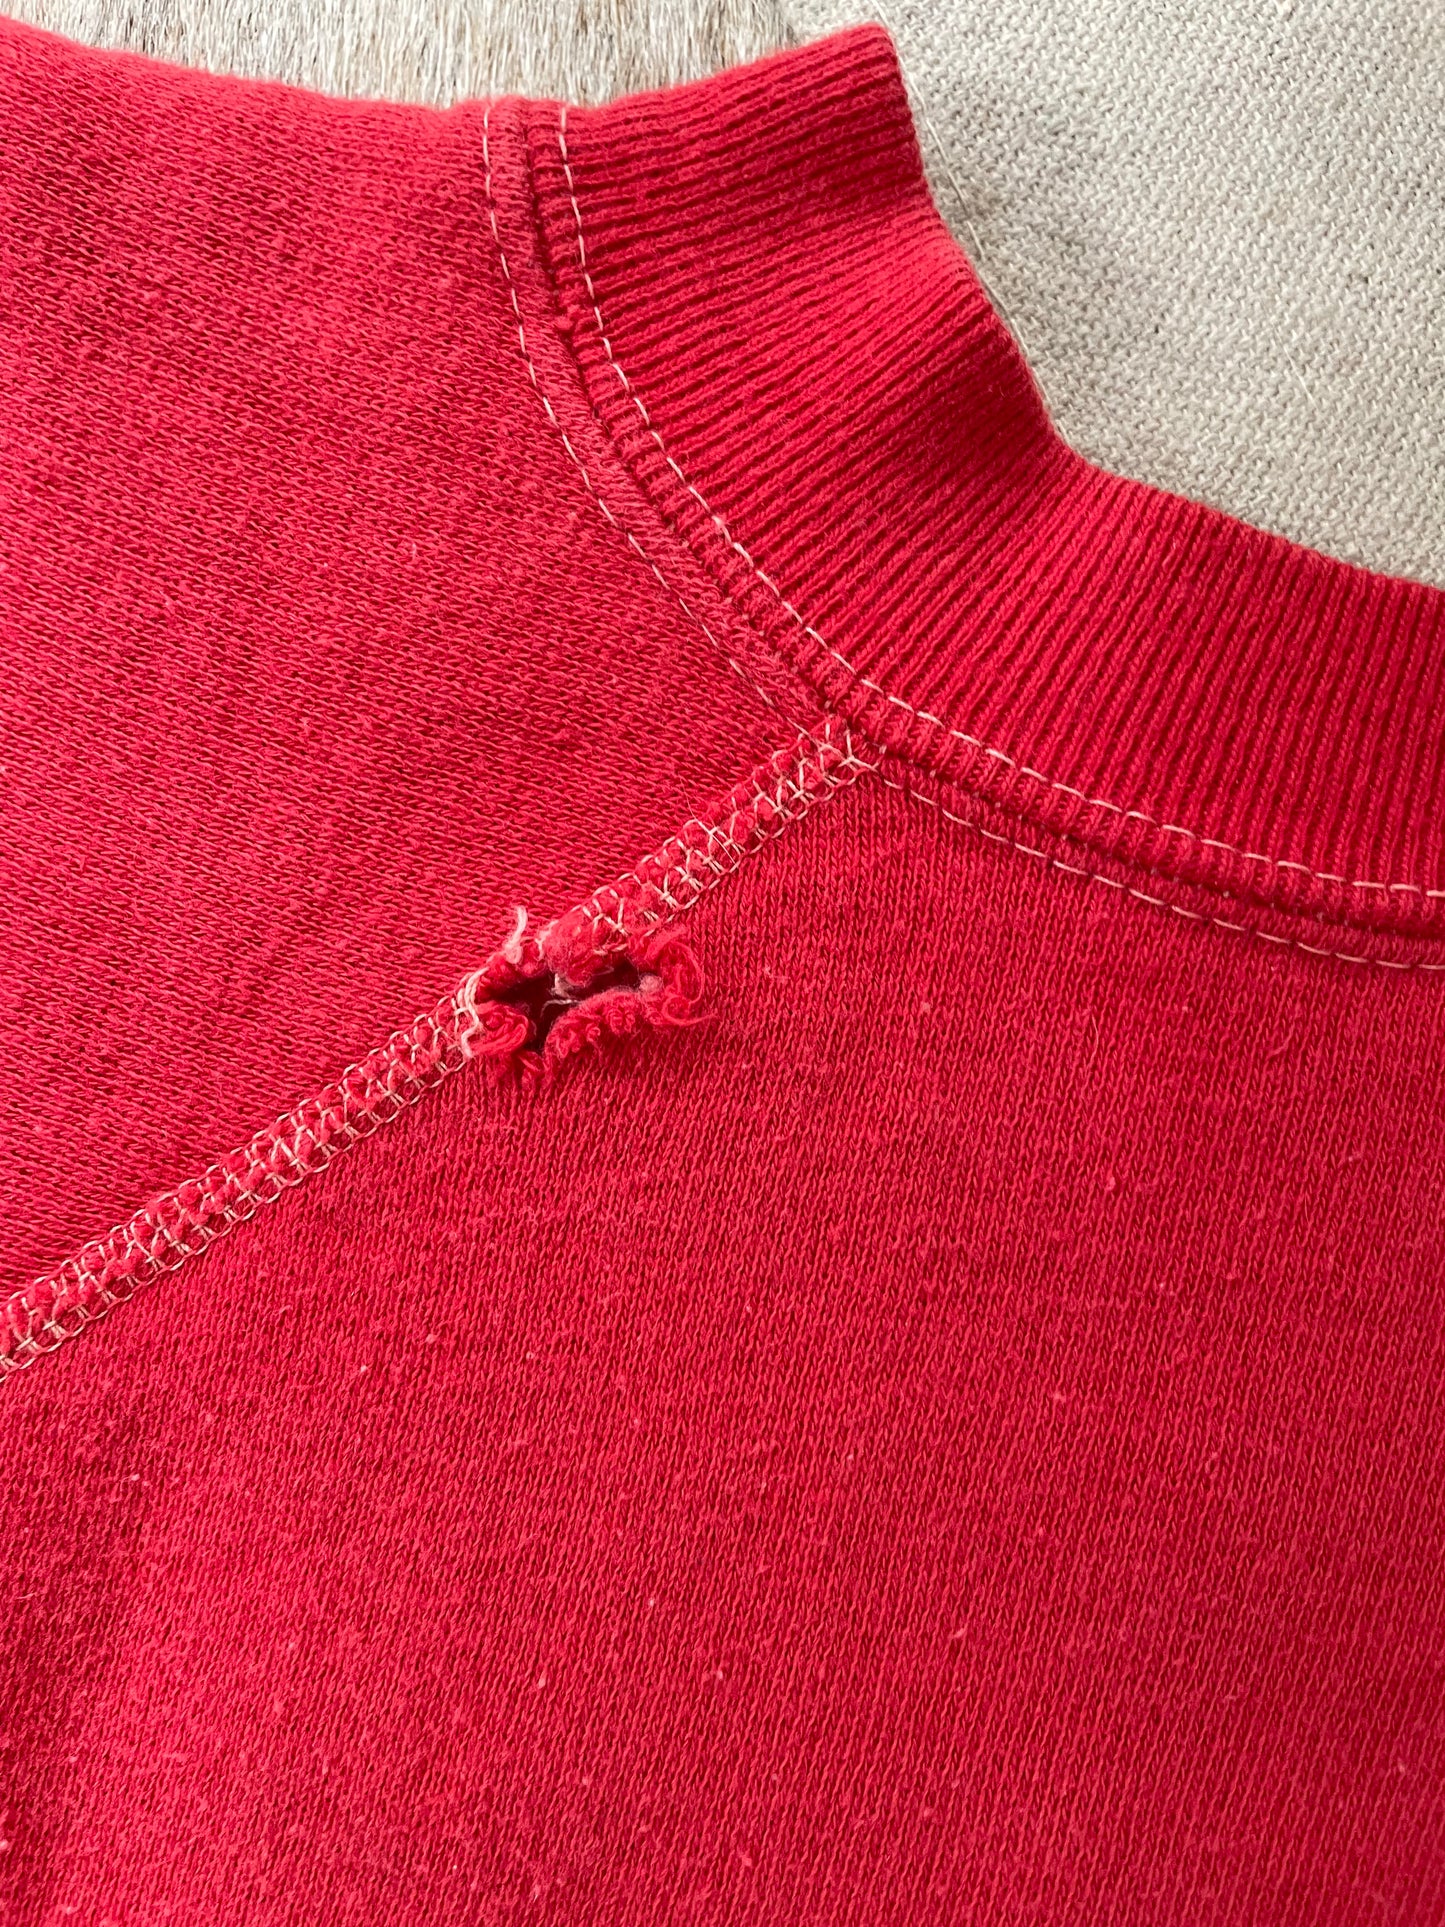 60s/70s Blank Red Sweatshirt